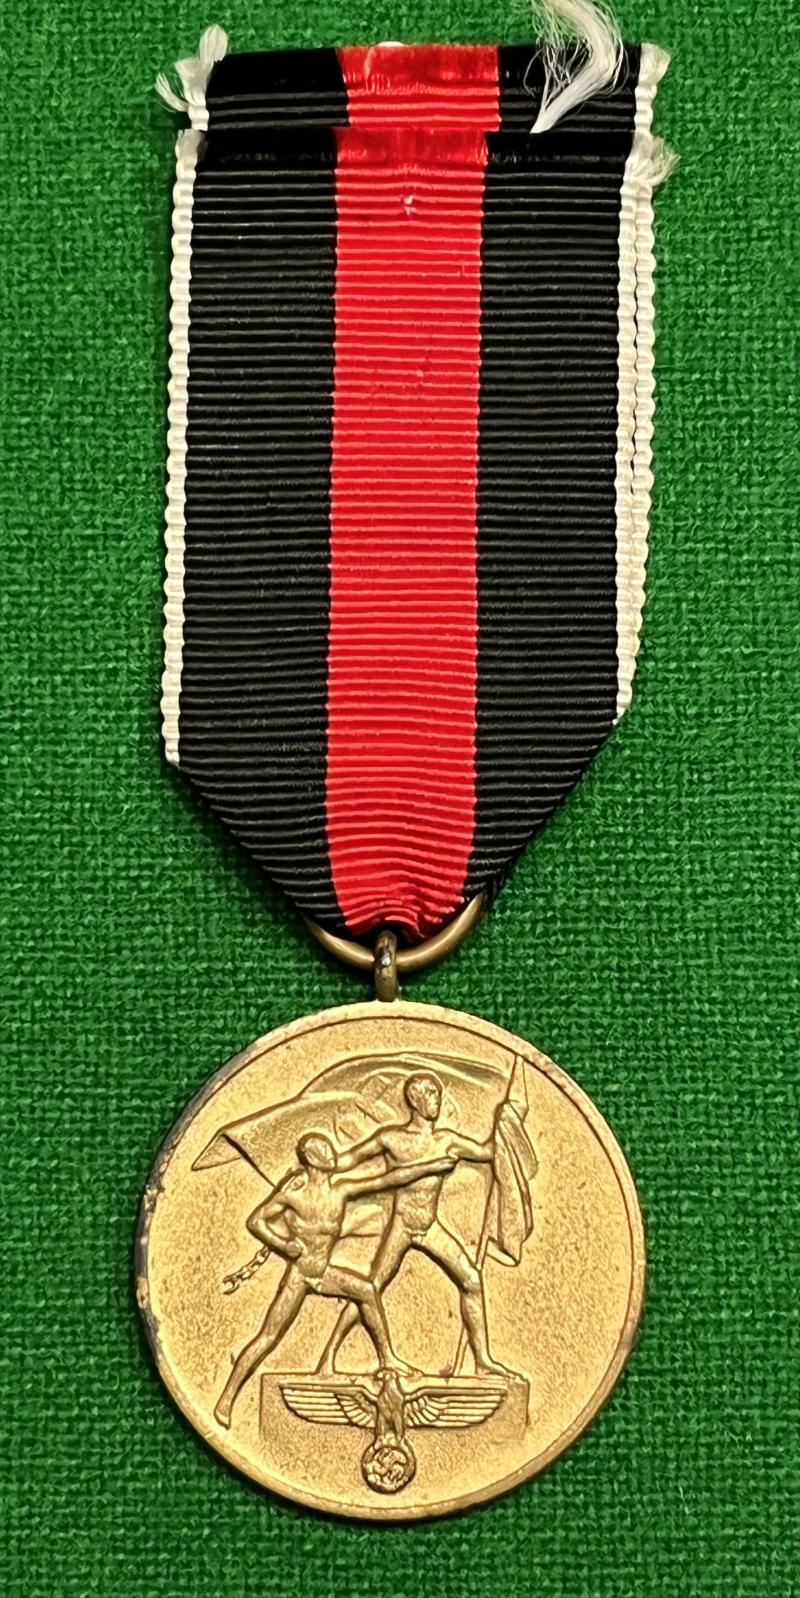 Sudetenland Medal.